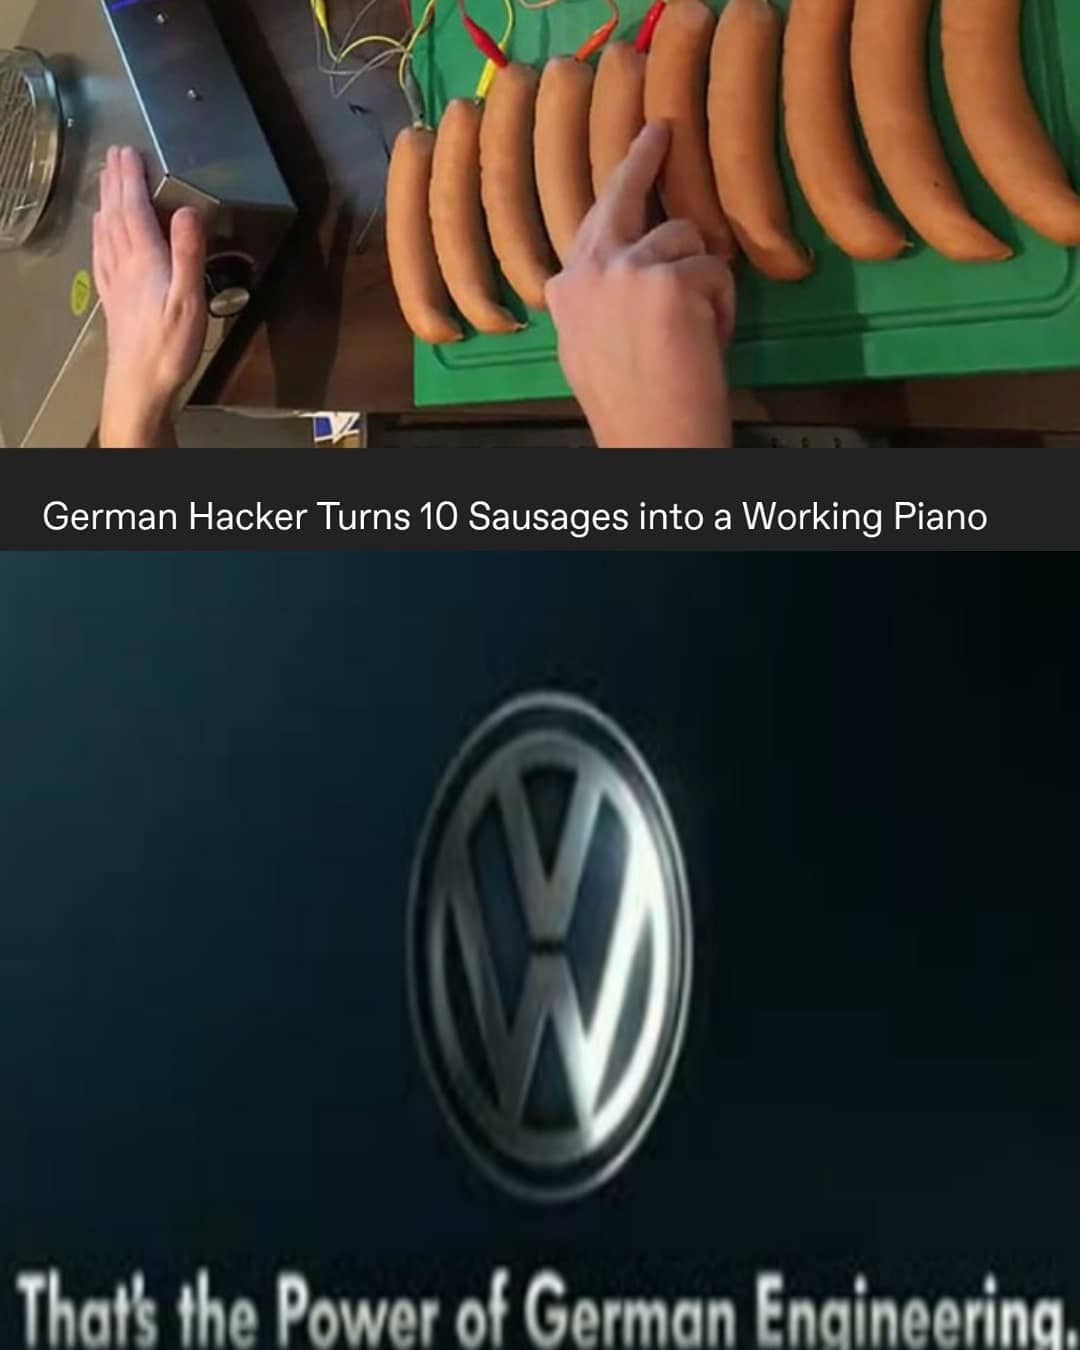 dank memes - german hacker turns sausages into piano - German Hacker Turns 10 Sausages into a Working Piano is That's the Power of German Engineering,